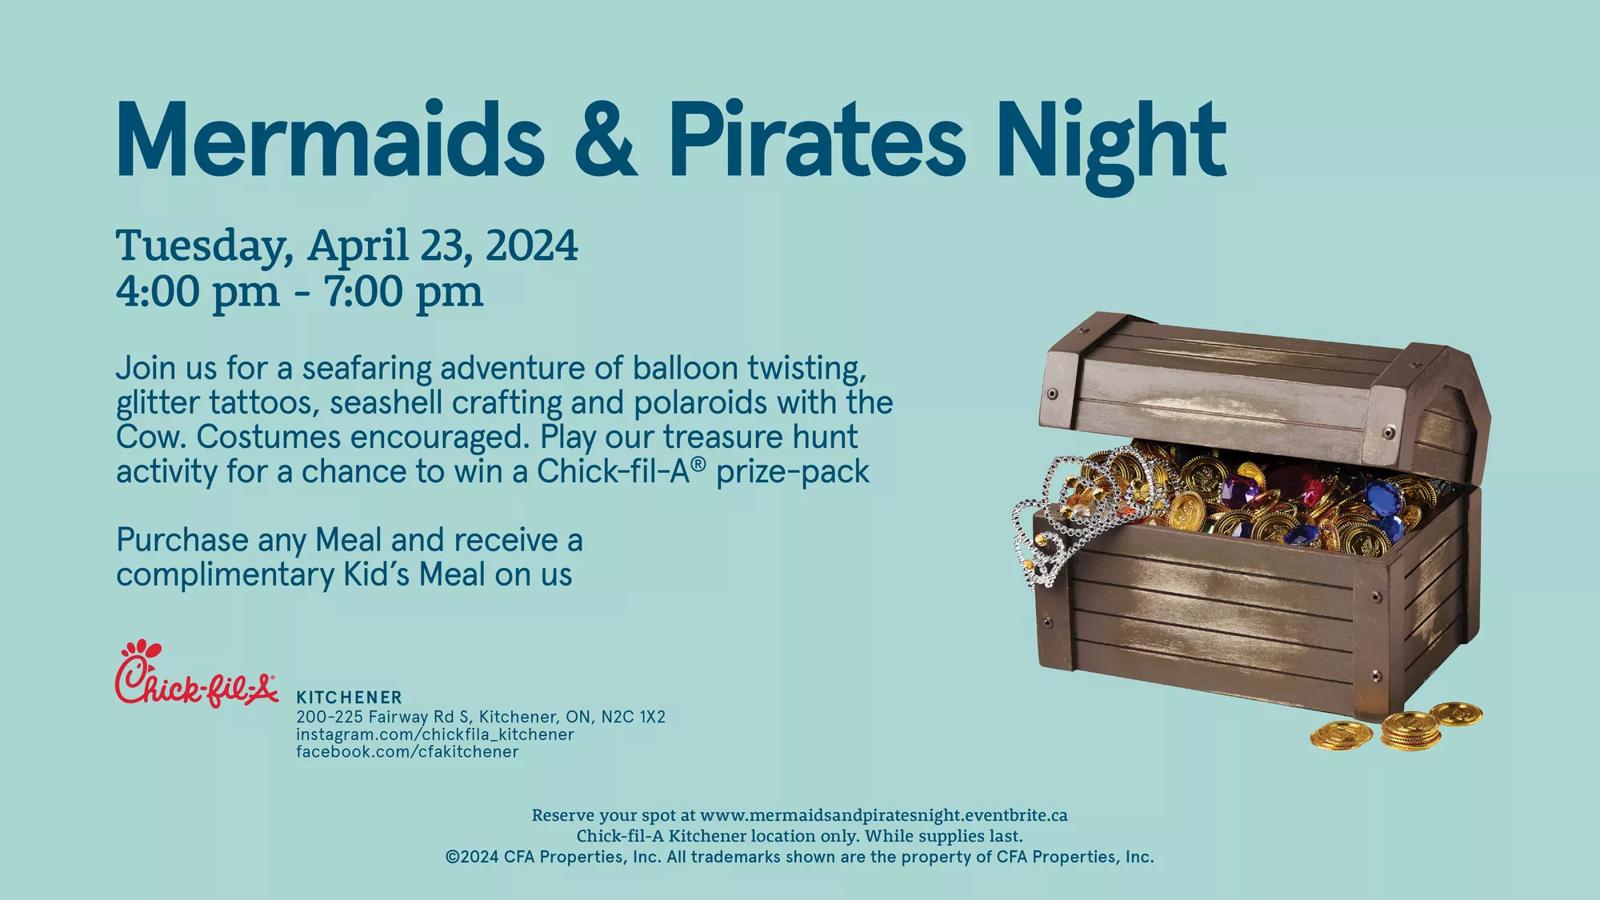 [CF Fairview Park] Chick-fil-A Kitchener's Mermaids & Pirates Night